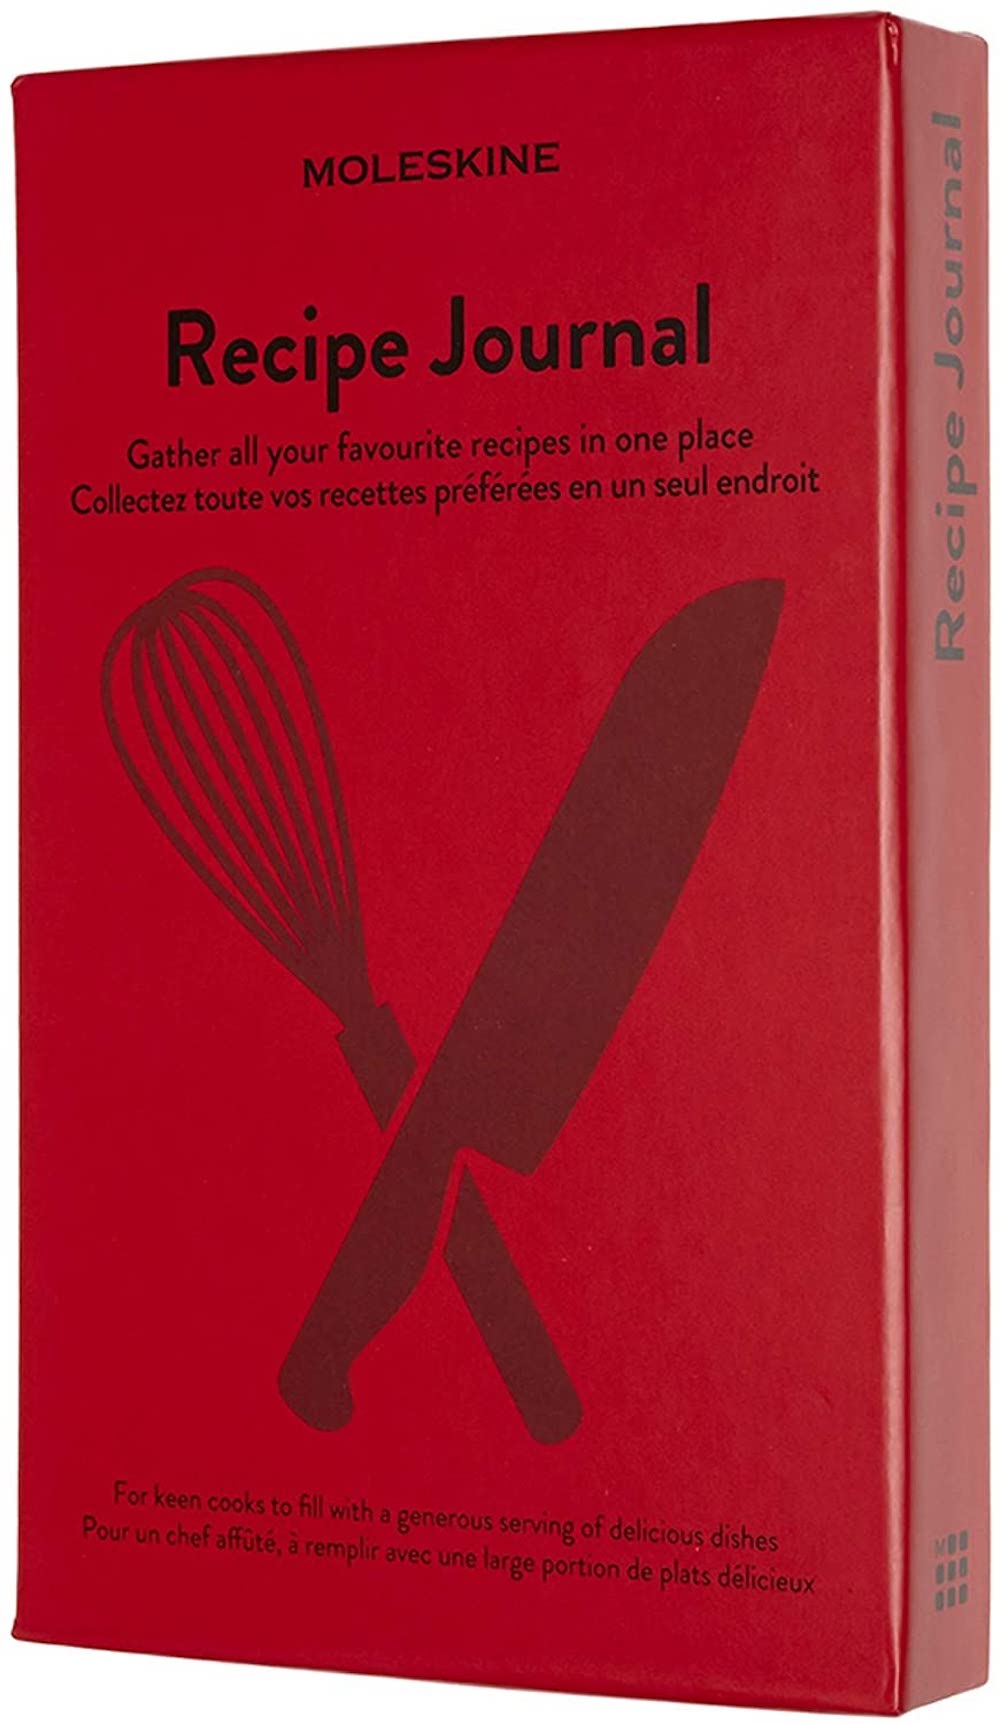 Moleskine recipe book.